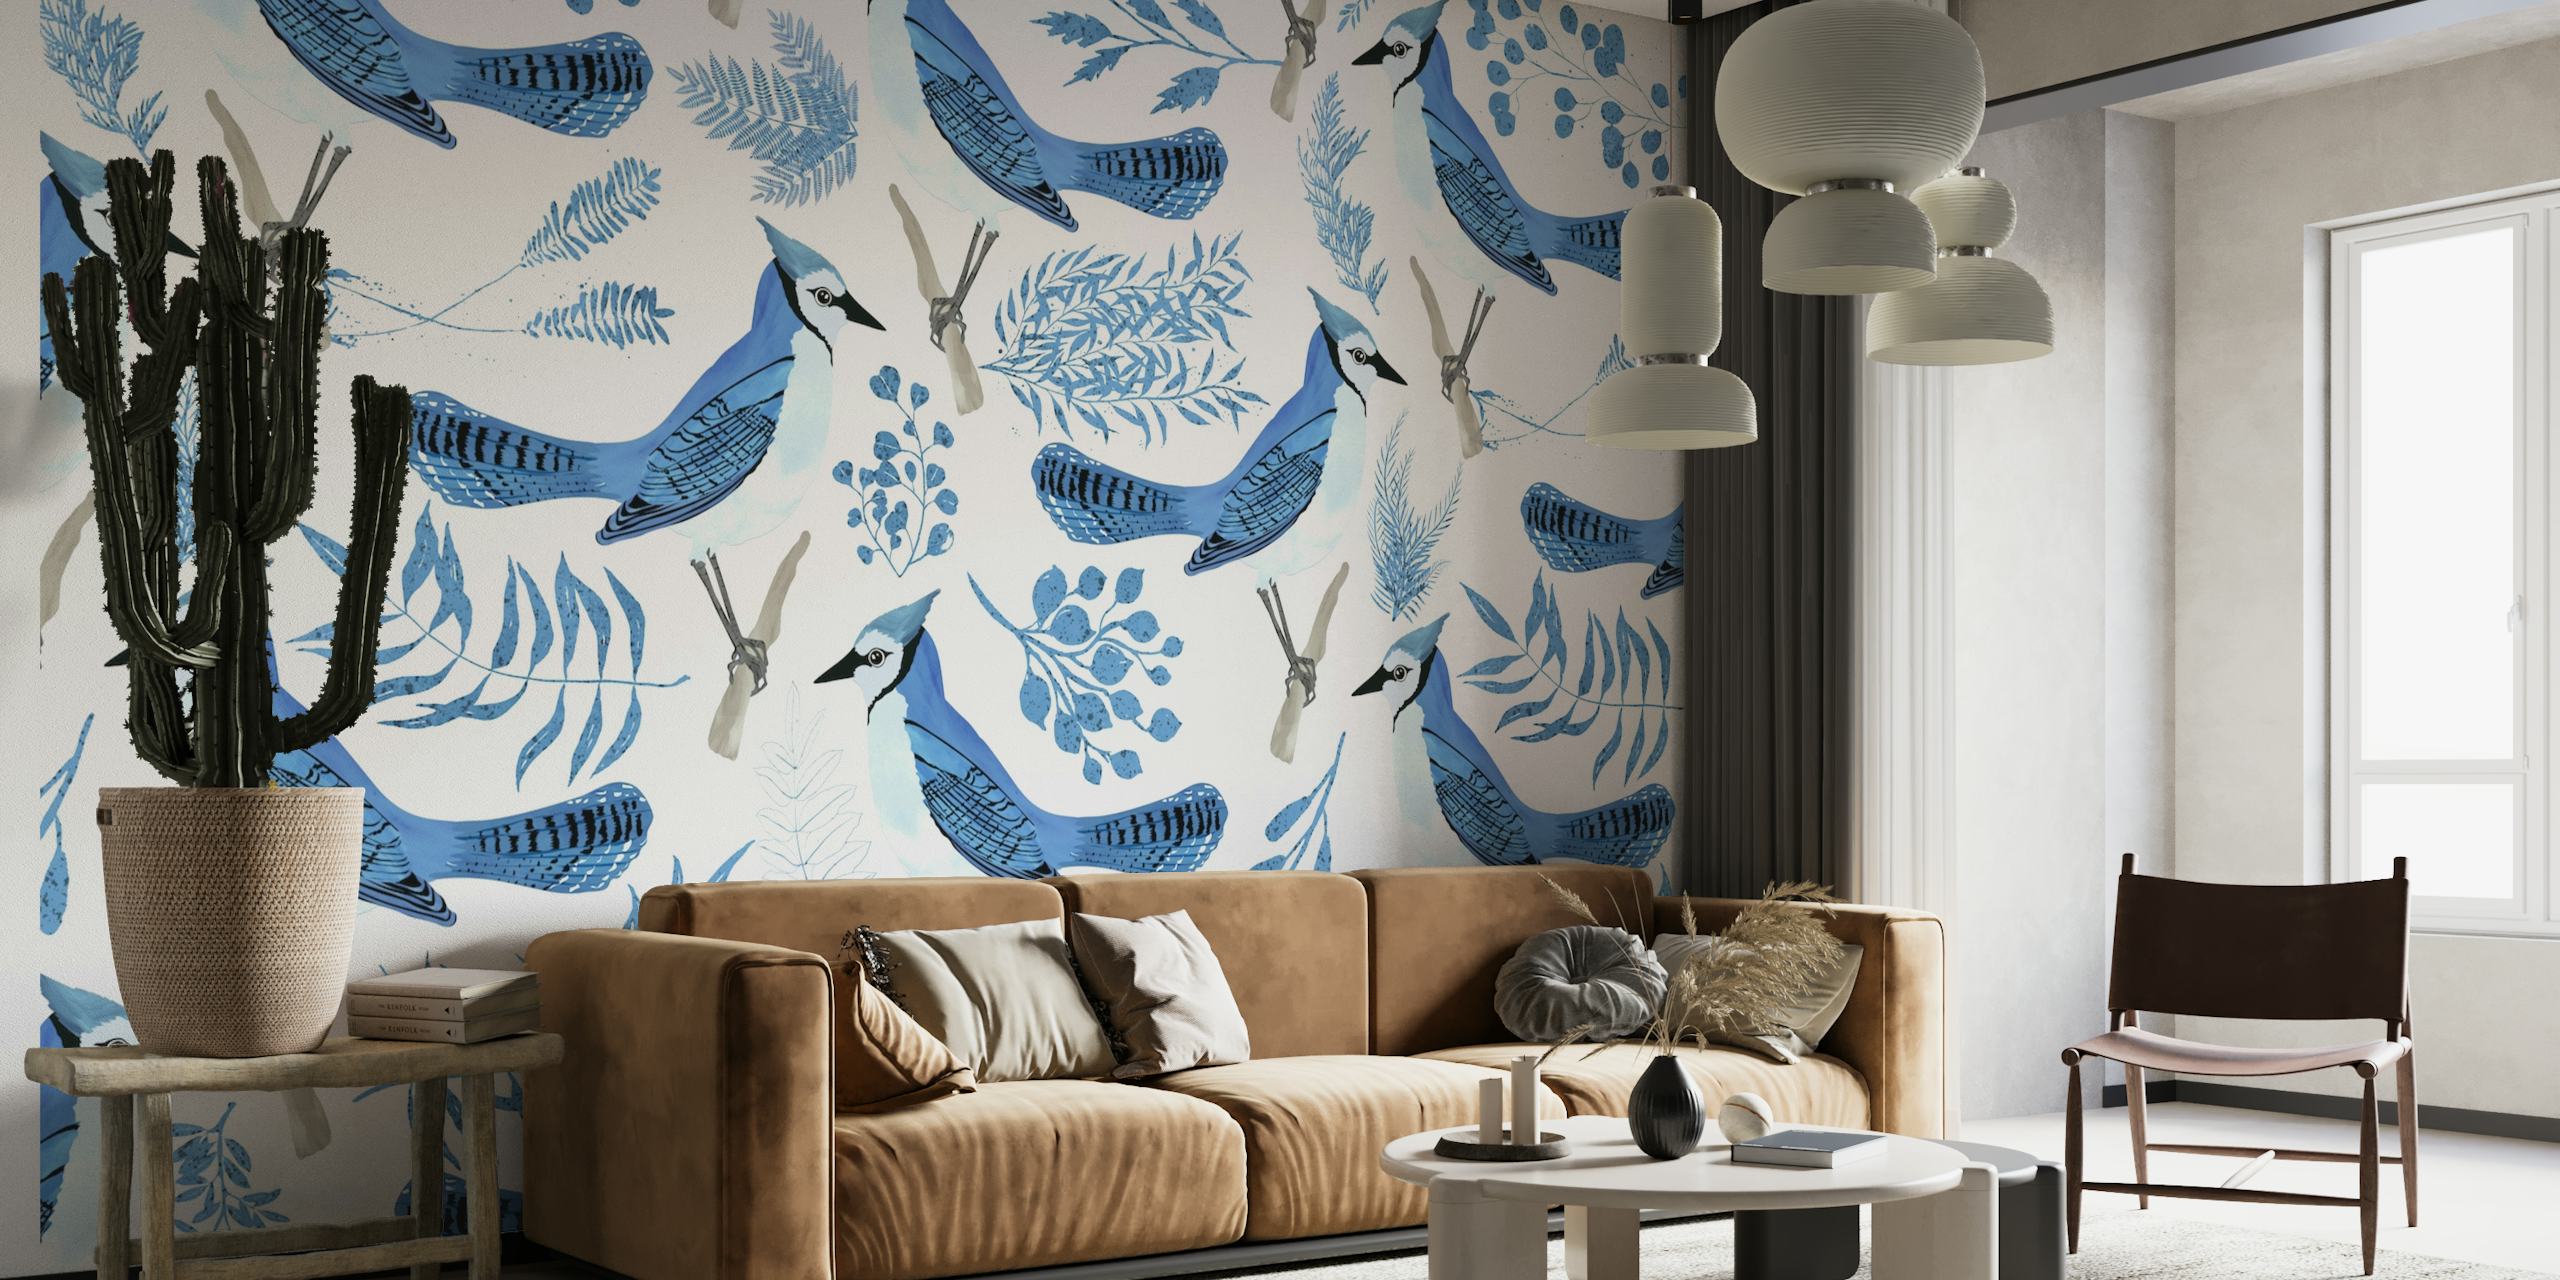 The Blue Jay white wallpaper